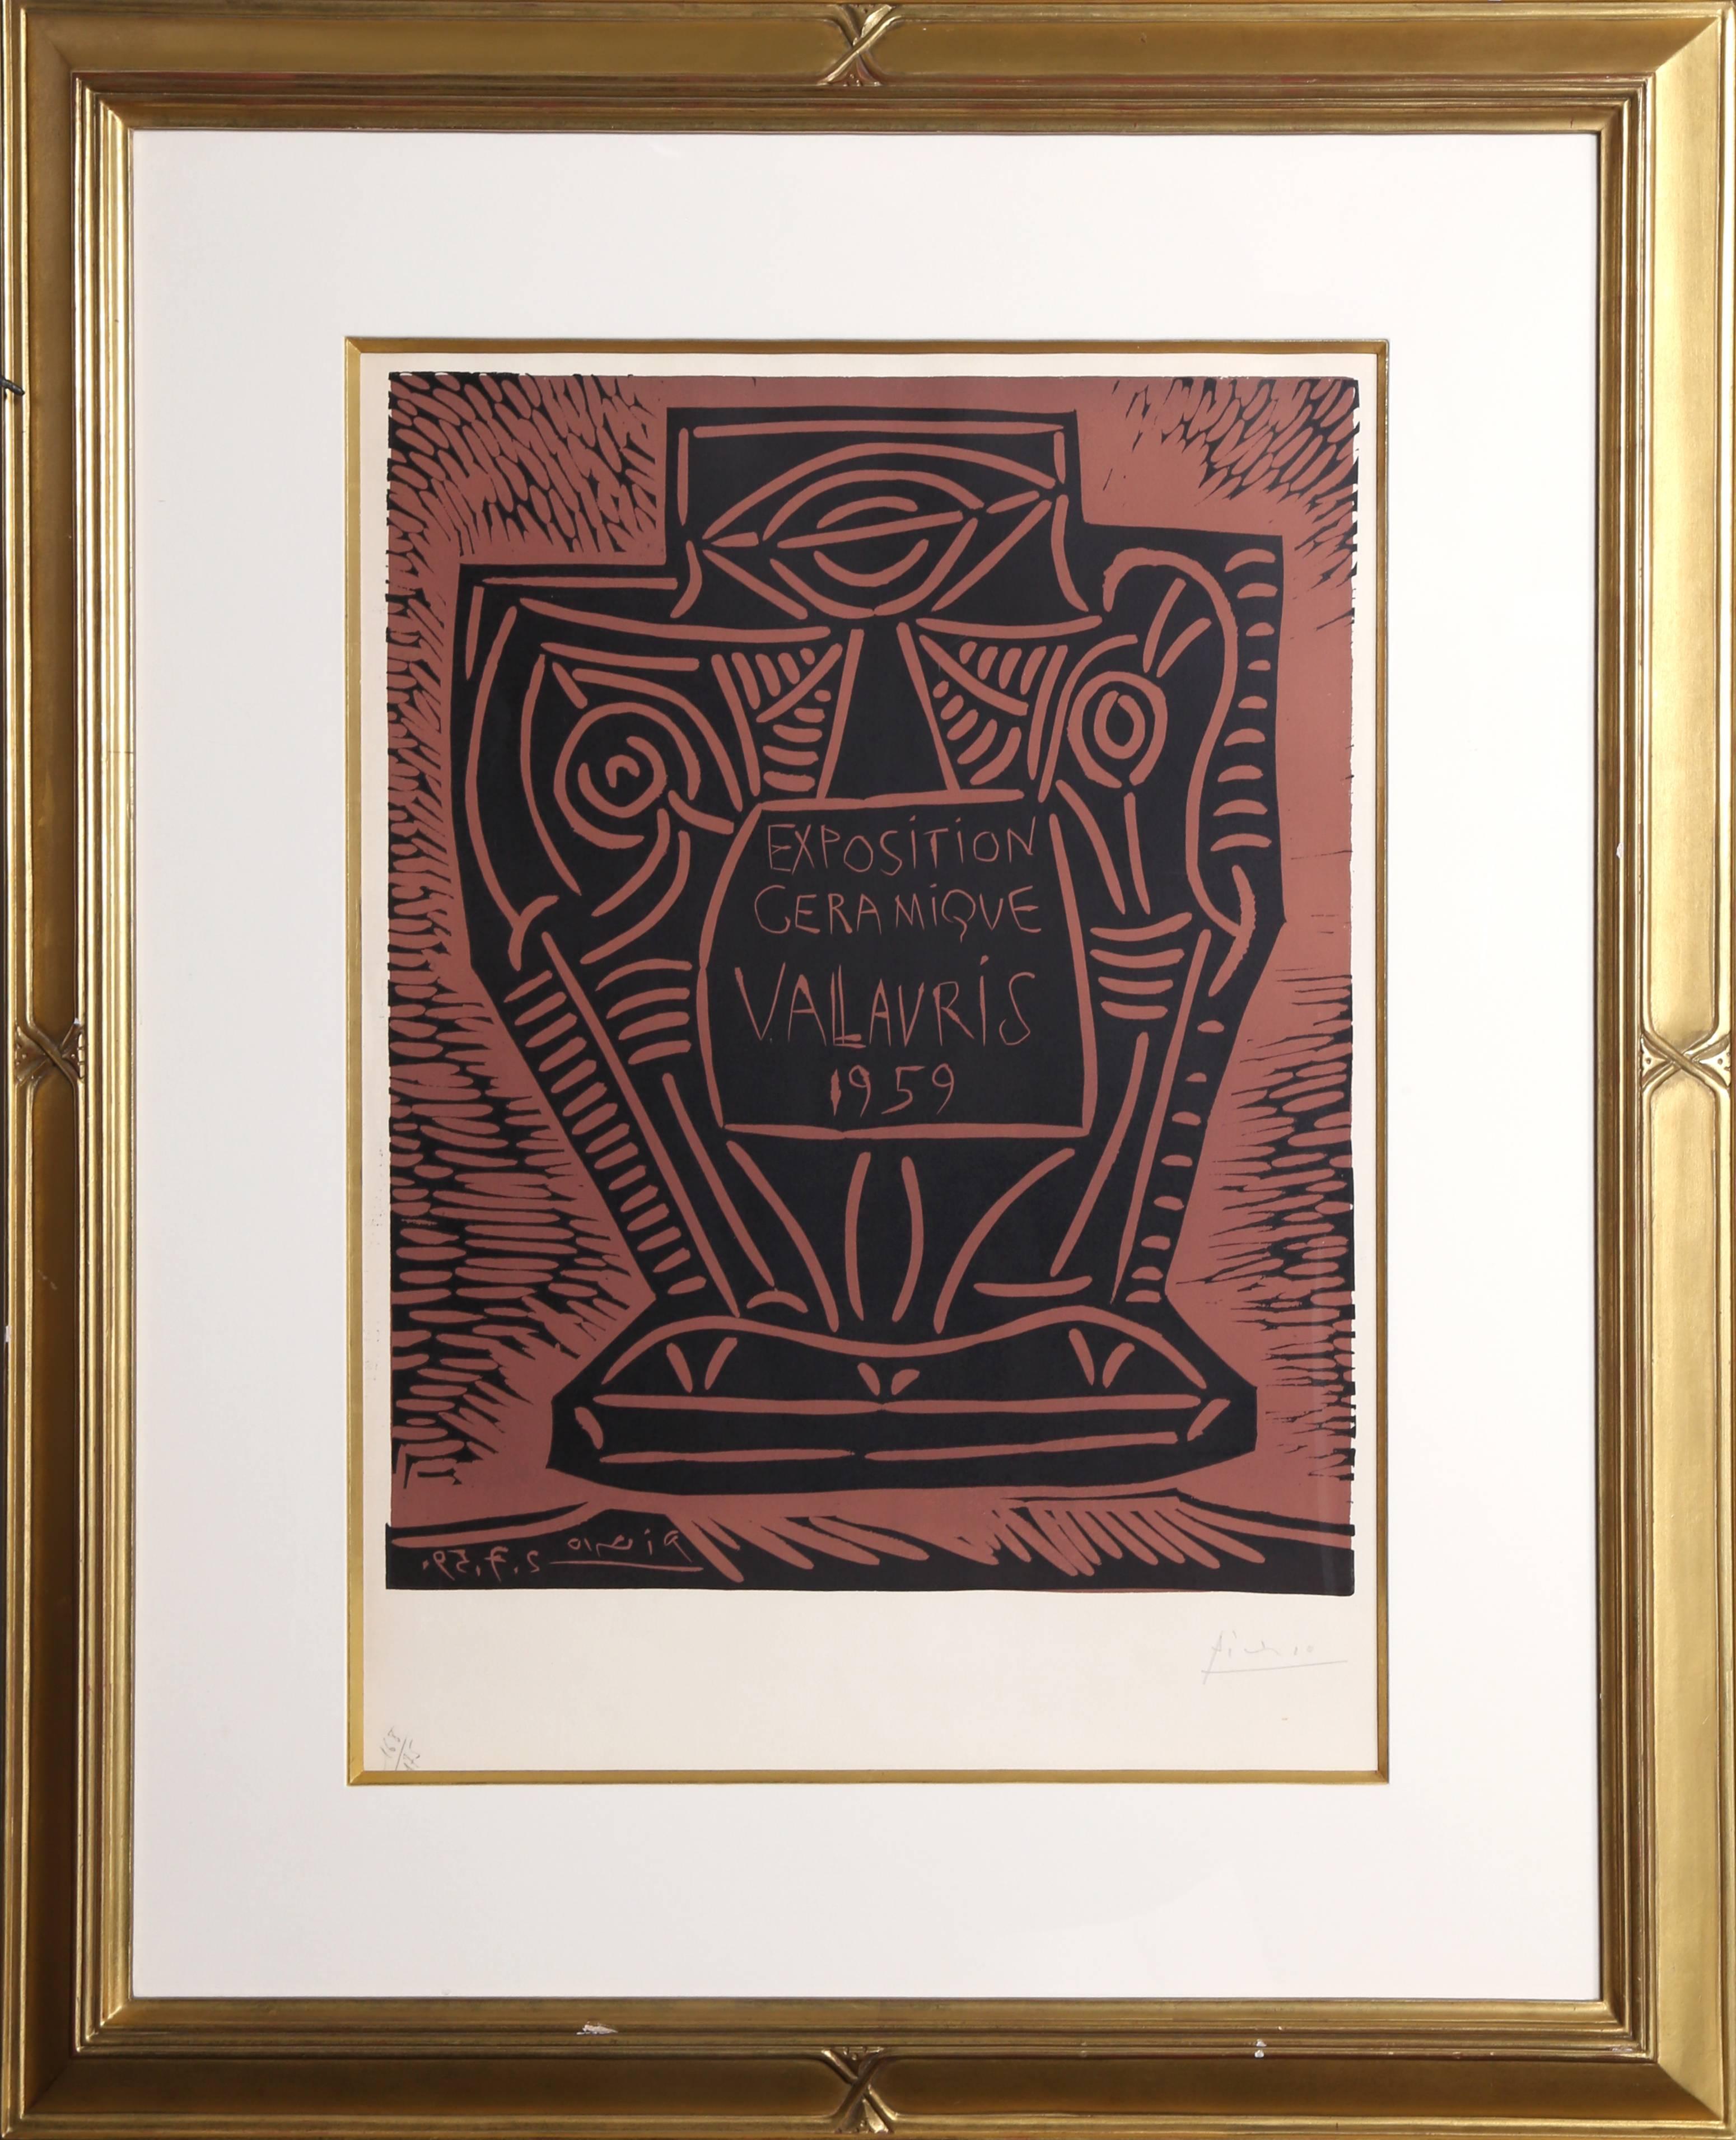 Pablo Picasso, "Exposition Ceramique Vallauris 1959 (Bloch 1286)," Linocut, 1959